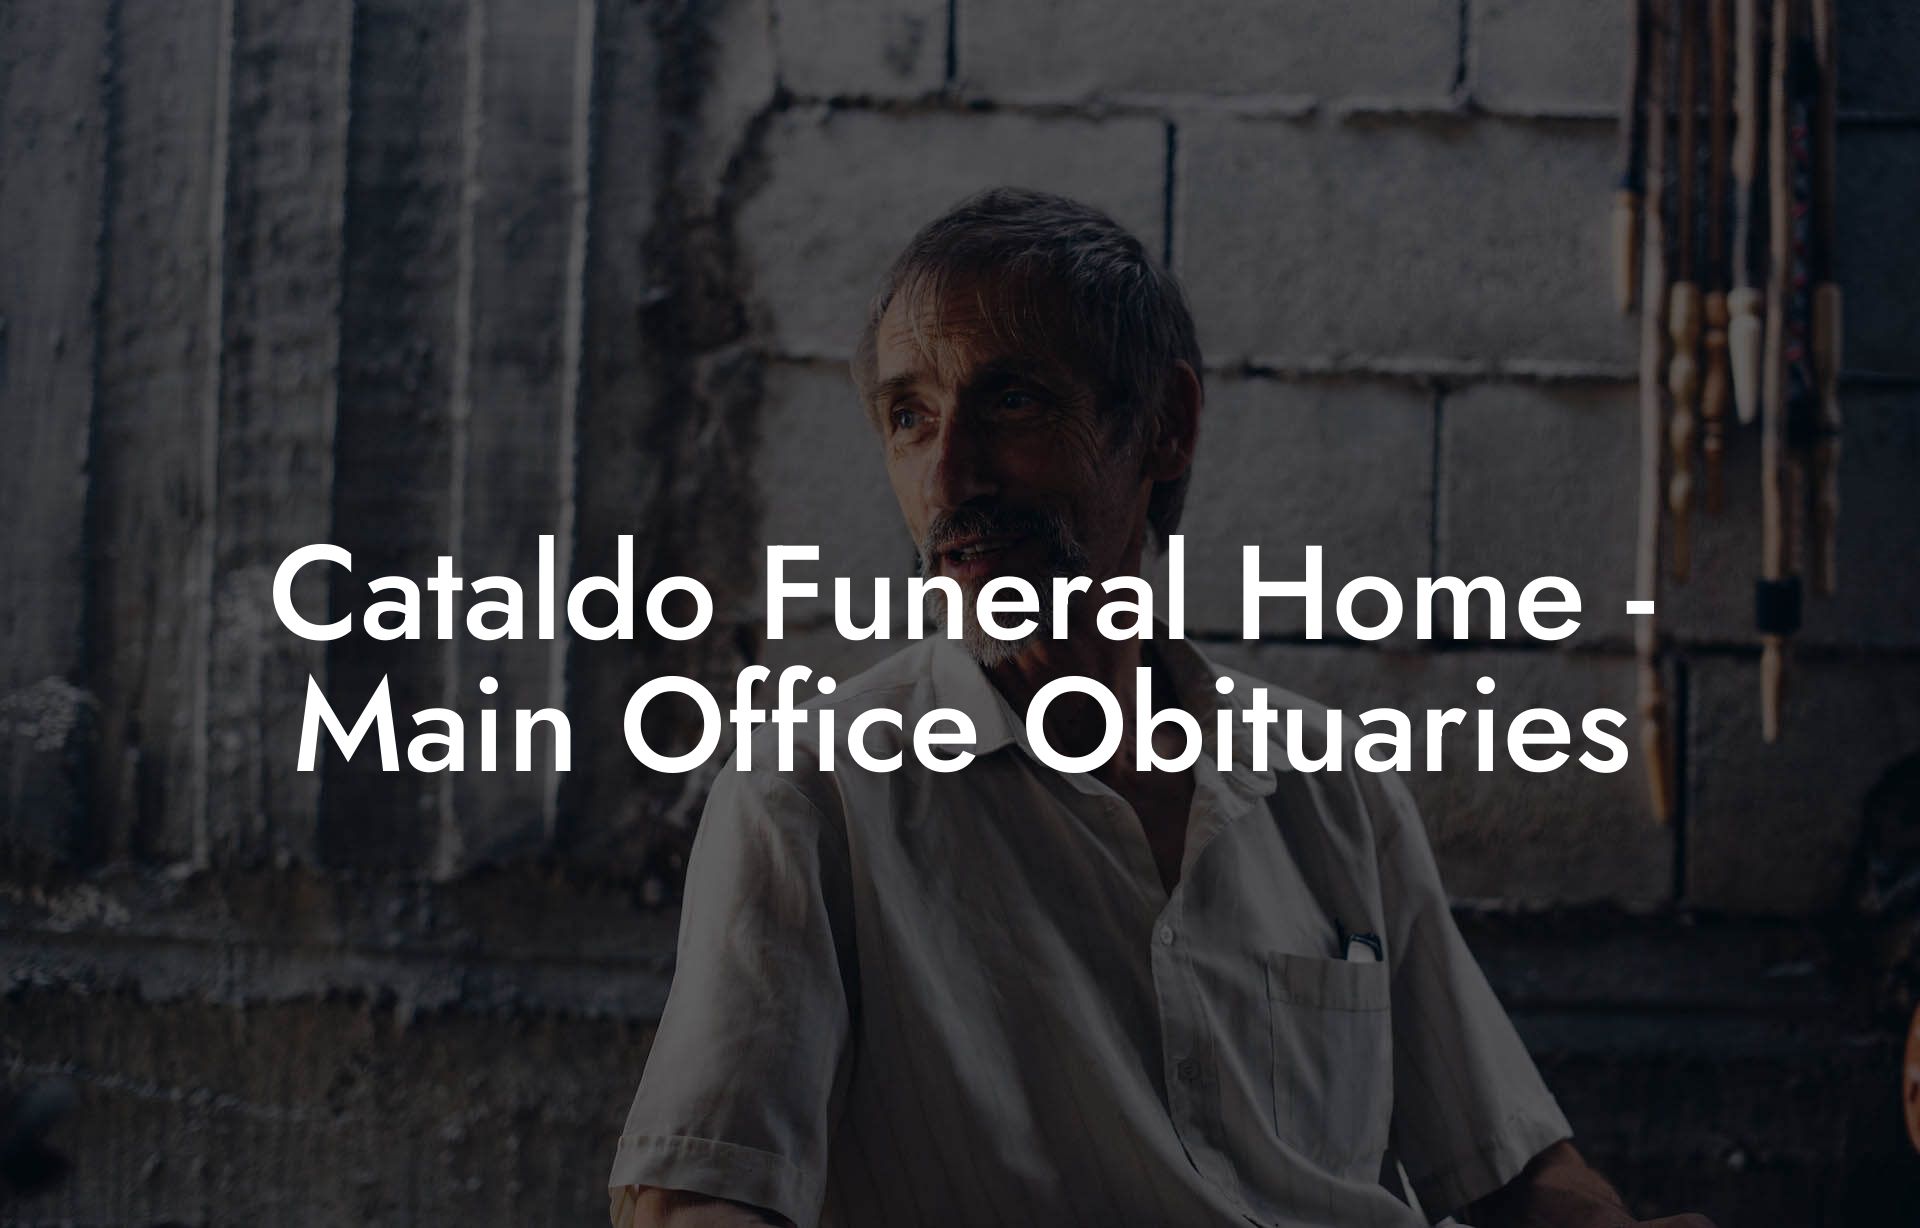 Cataldo Funeral Home - Main Office Obituaries